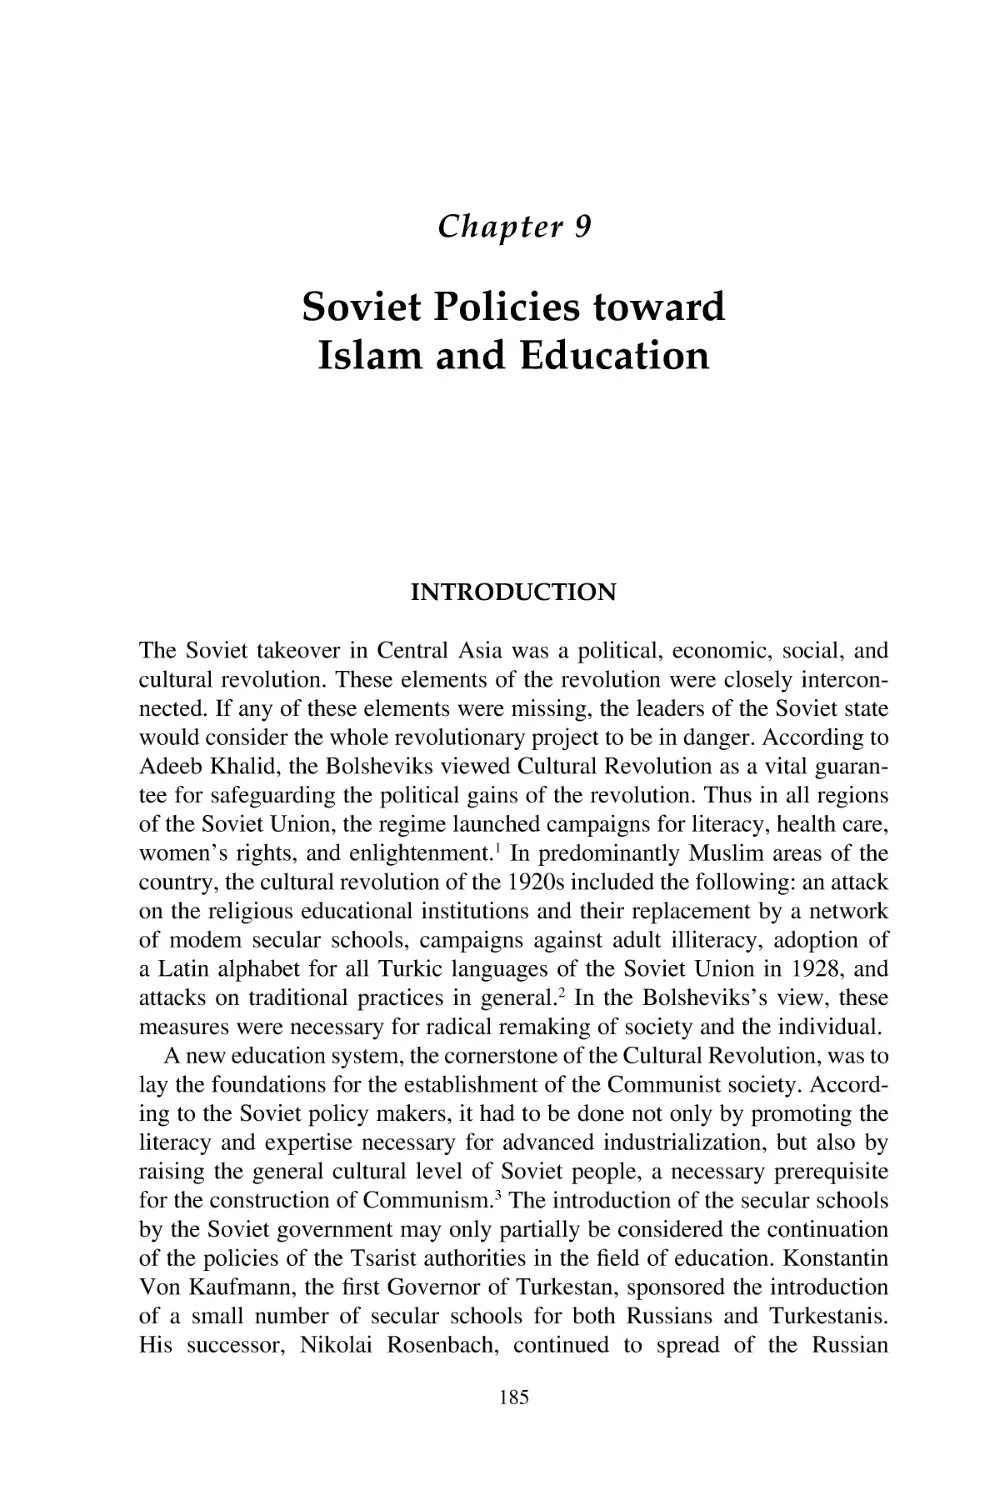 9. Soviet Policies toward Islam and Education